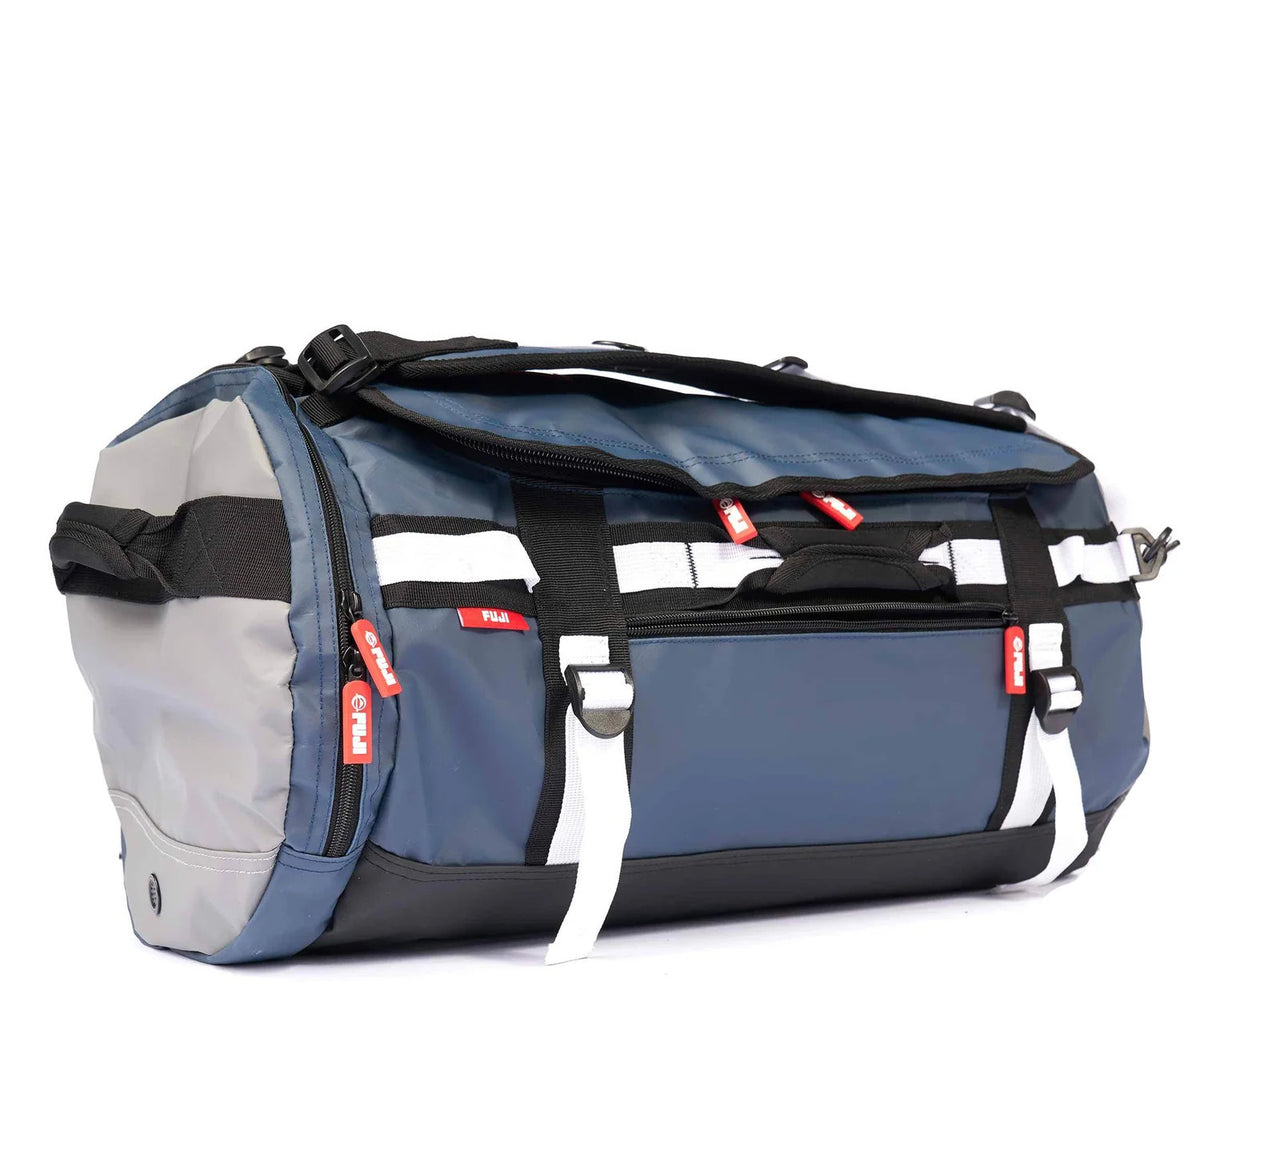 Fuji Comp Convertible Backpack Duffle - Navy